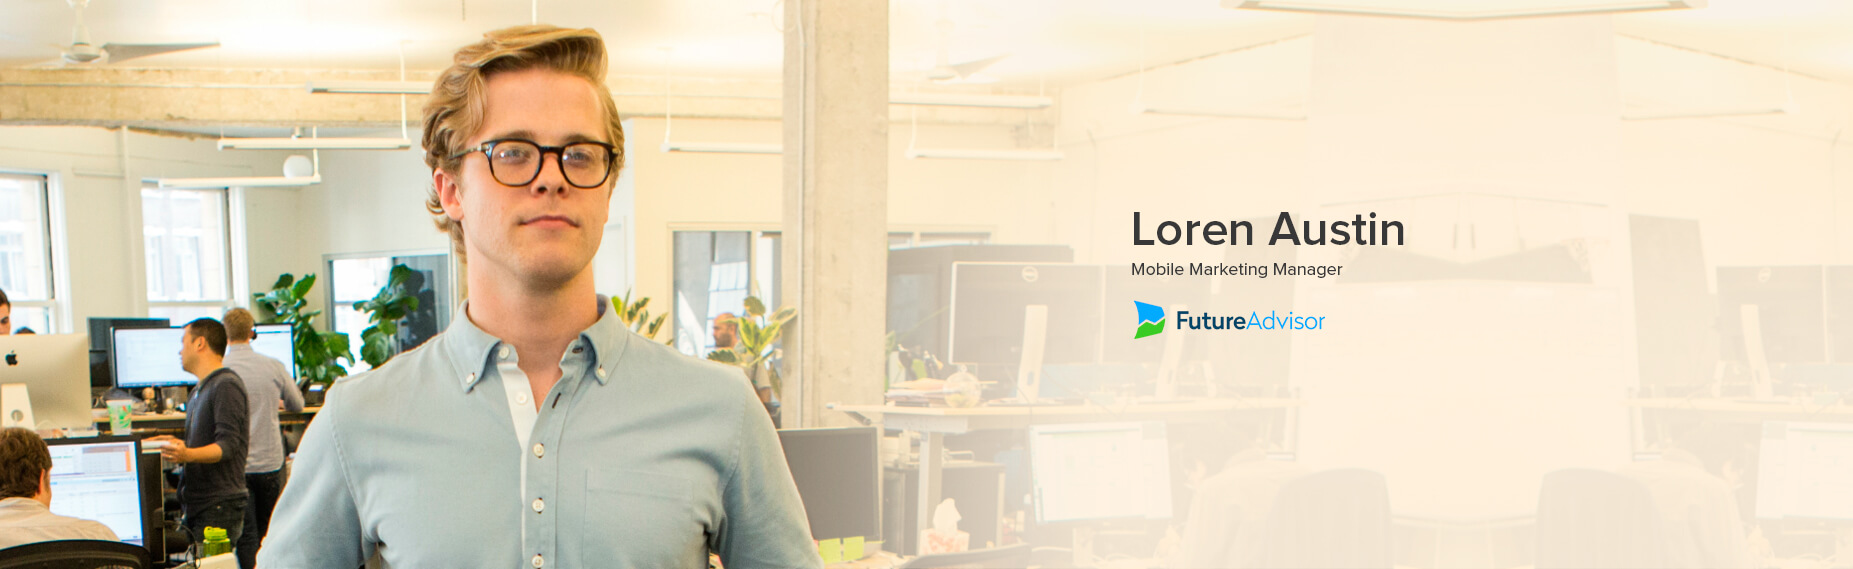 How Loren Austin got into mobile marketing